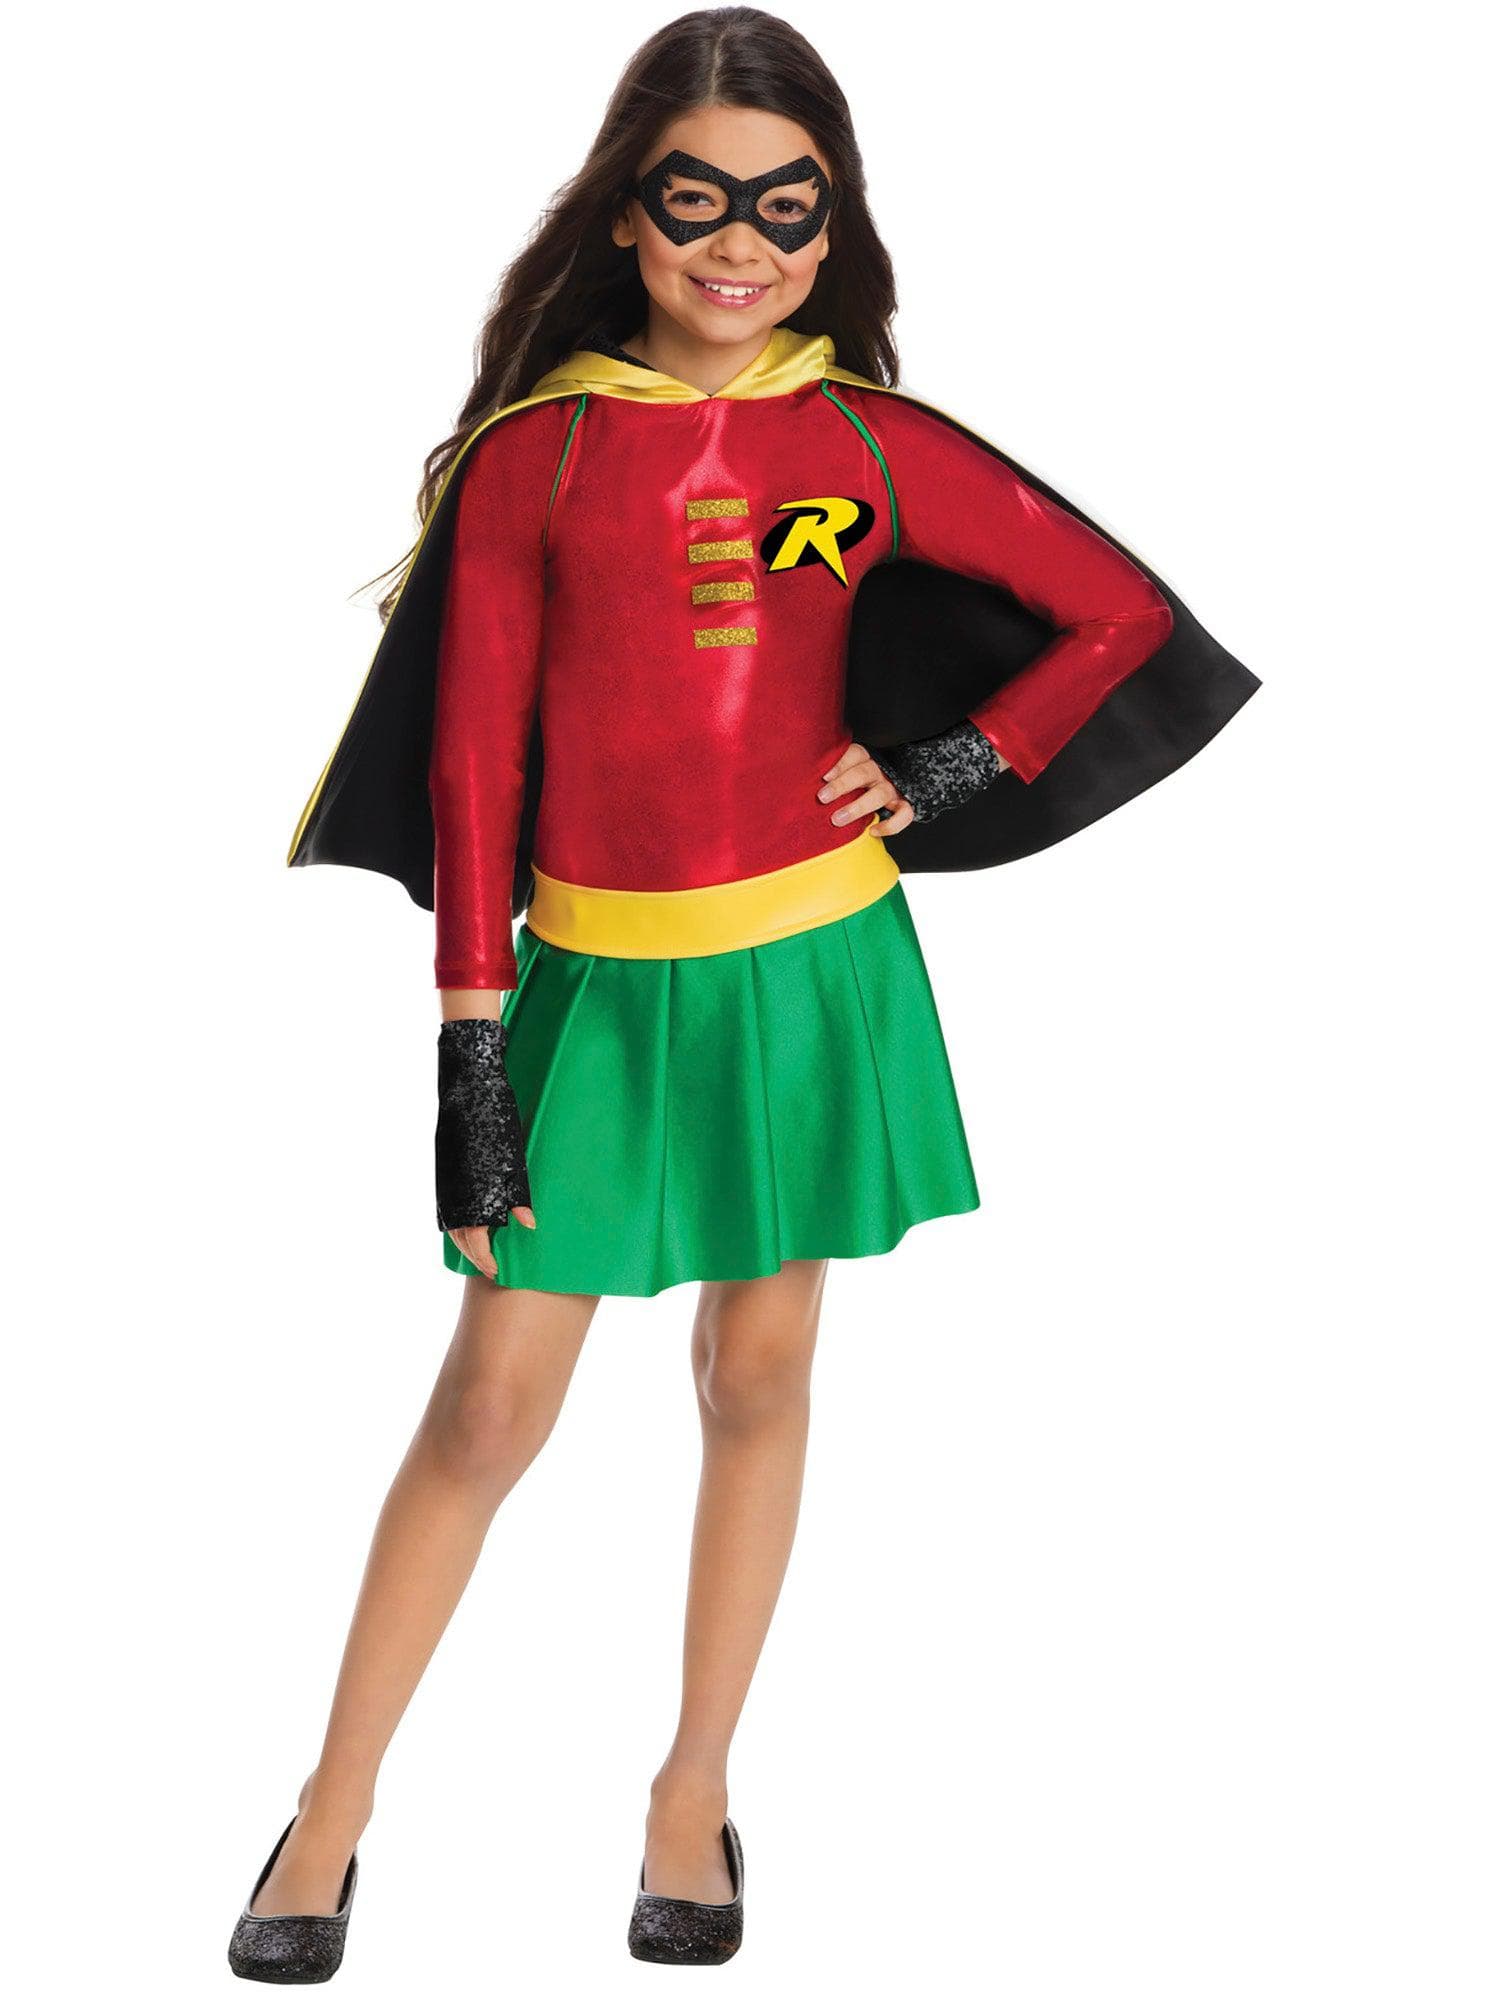 Kids DC Comics Robin Costume - costumes.com